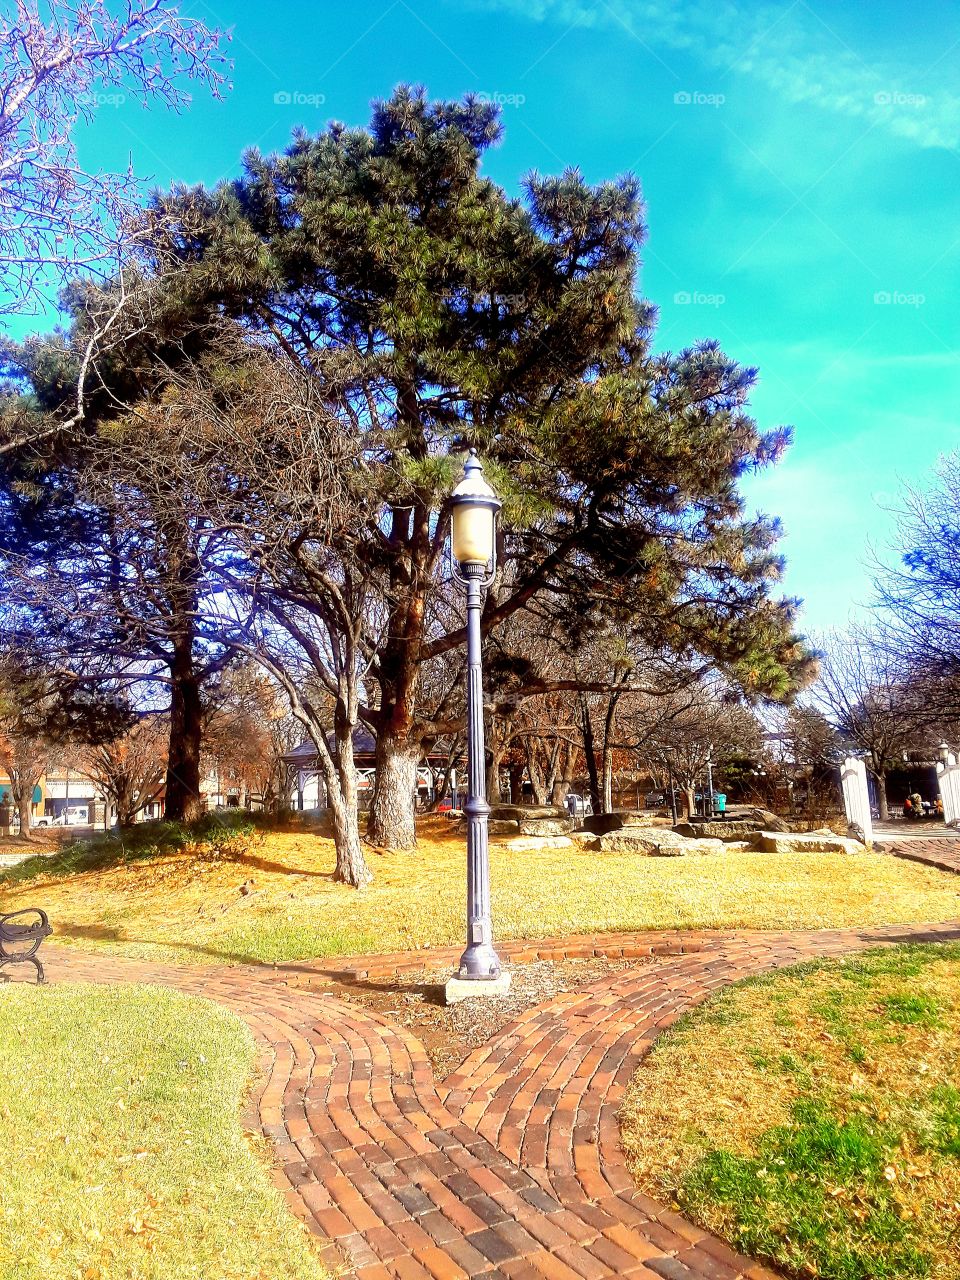 Lightpost In The Park